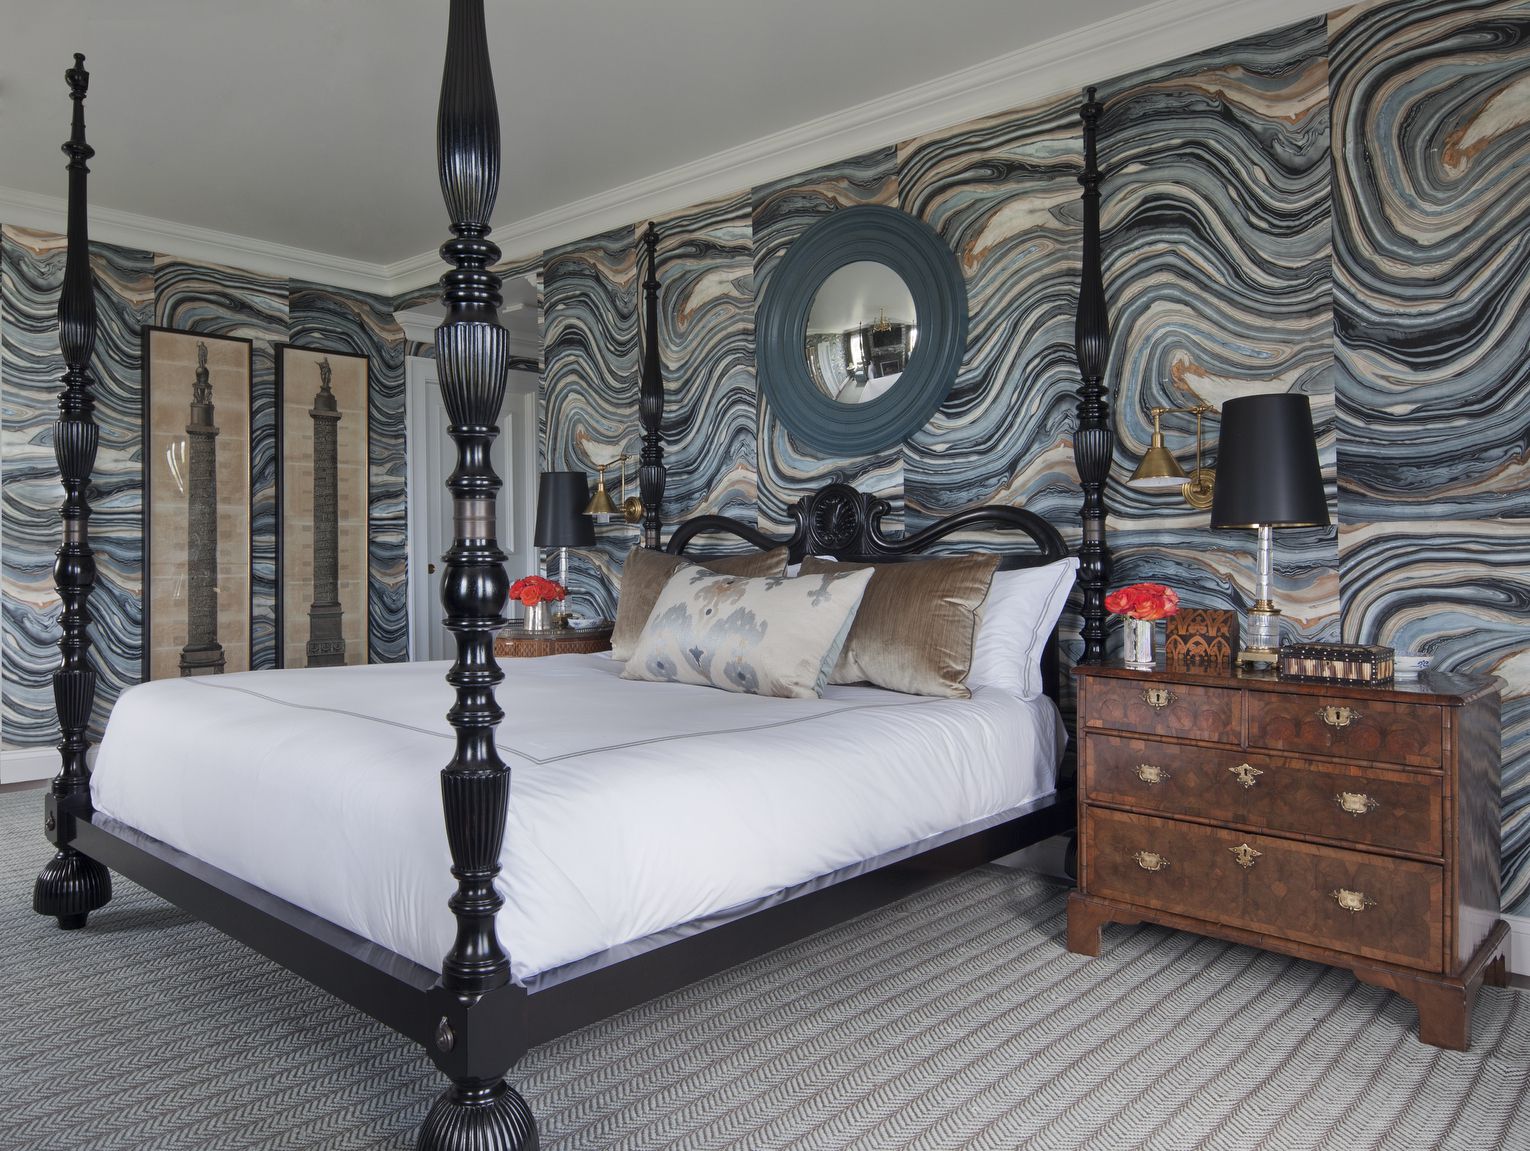 50+ Stylish Bedroom Design Ideas - Modern Bedrooms Decorating Tips